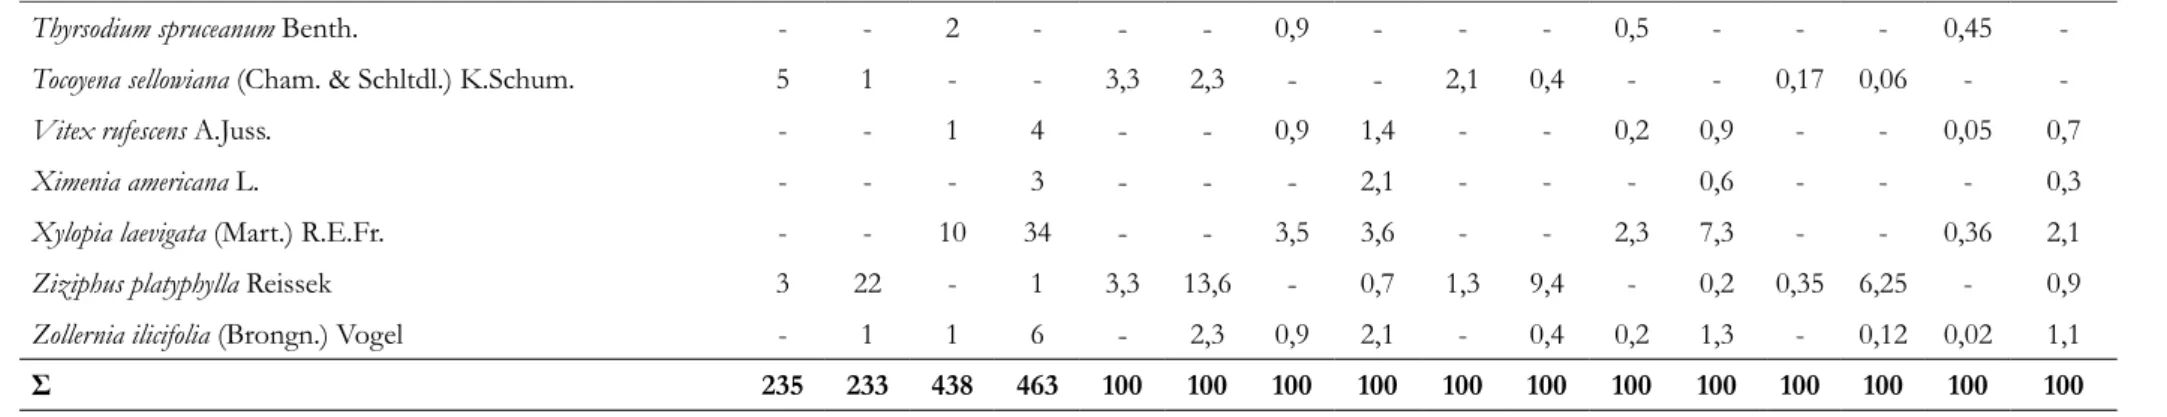 Tabela 2 - Índices de diversidade, riqueza, altura e diâmetro médio por área. H’ = índice de diversidade de Shannon; J = índice de Equabilidade de Pielou (J); Alt